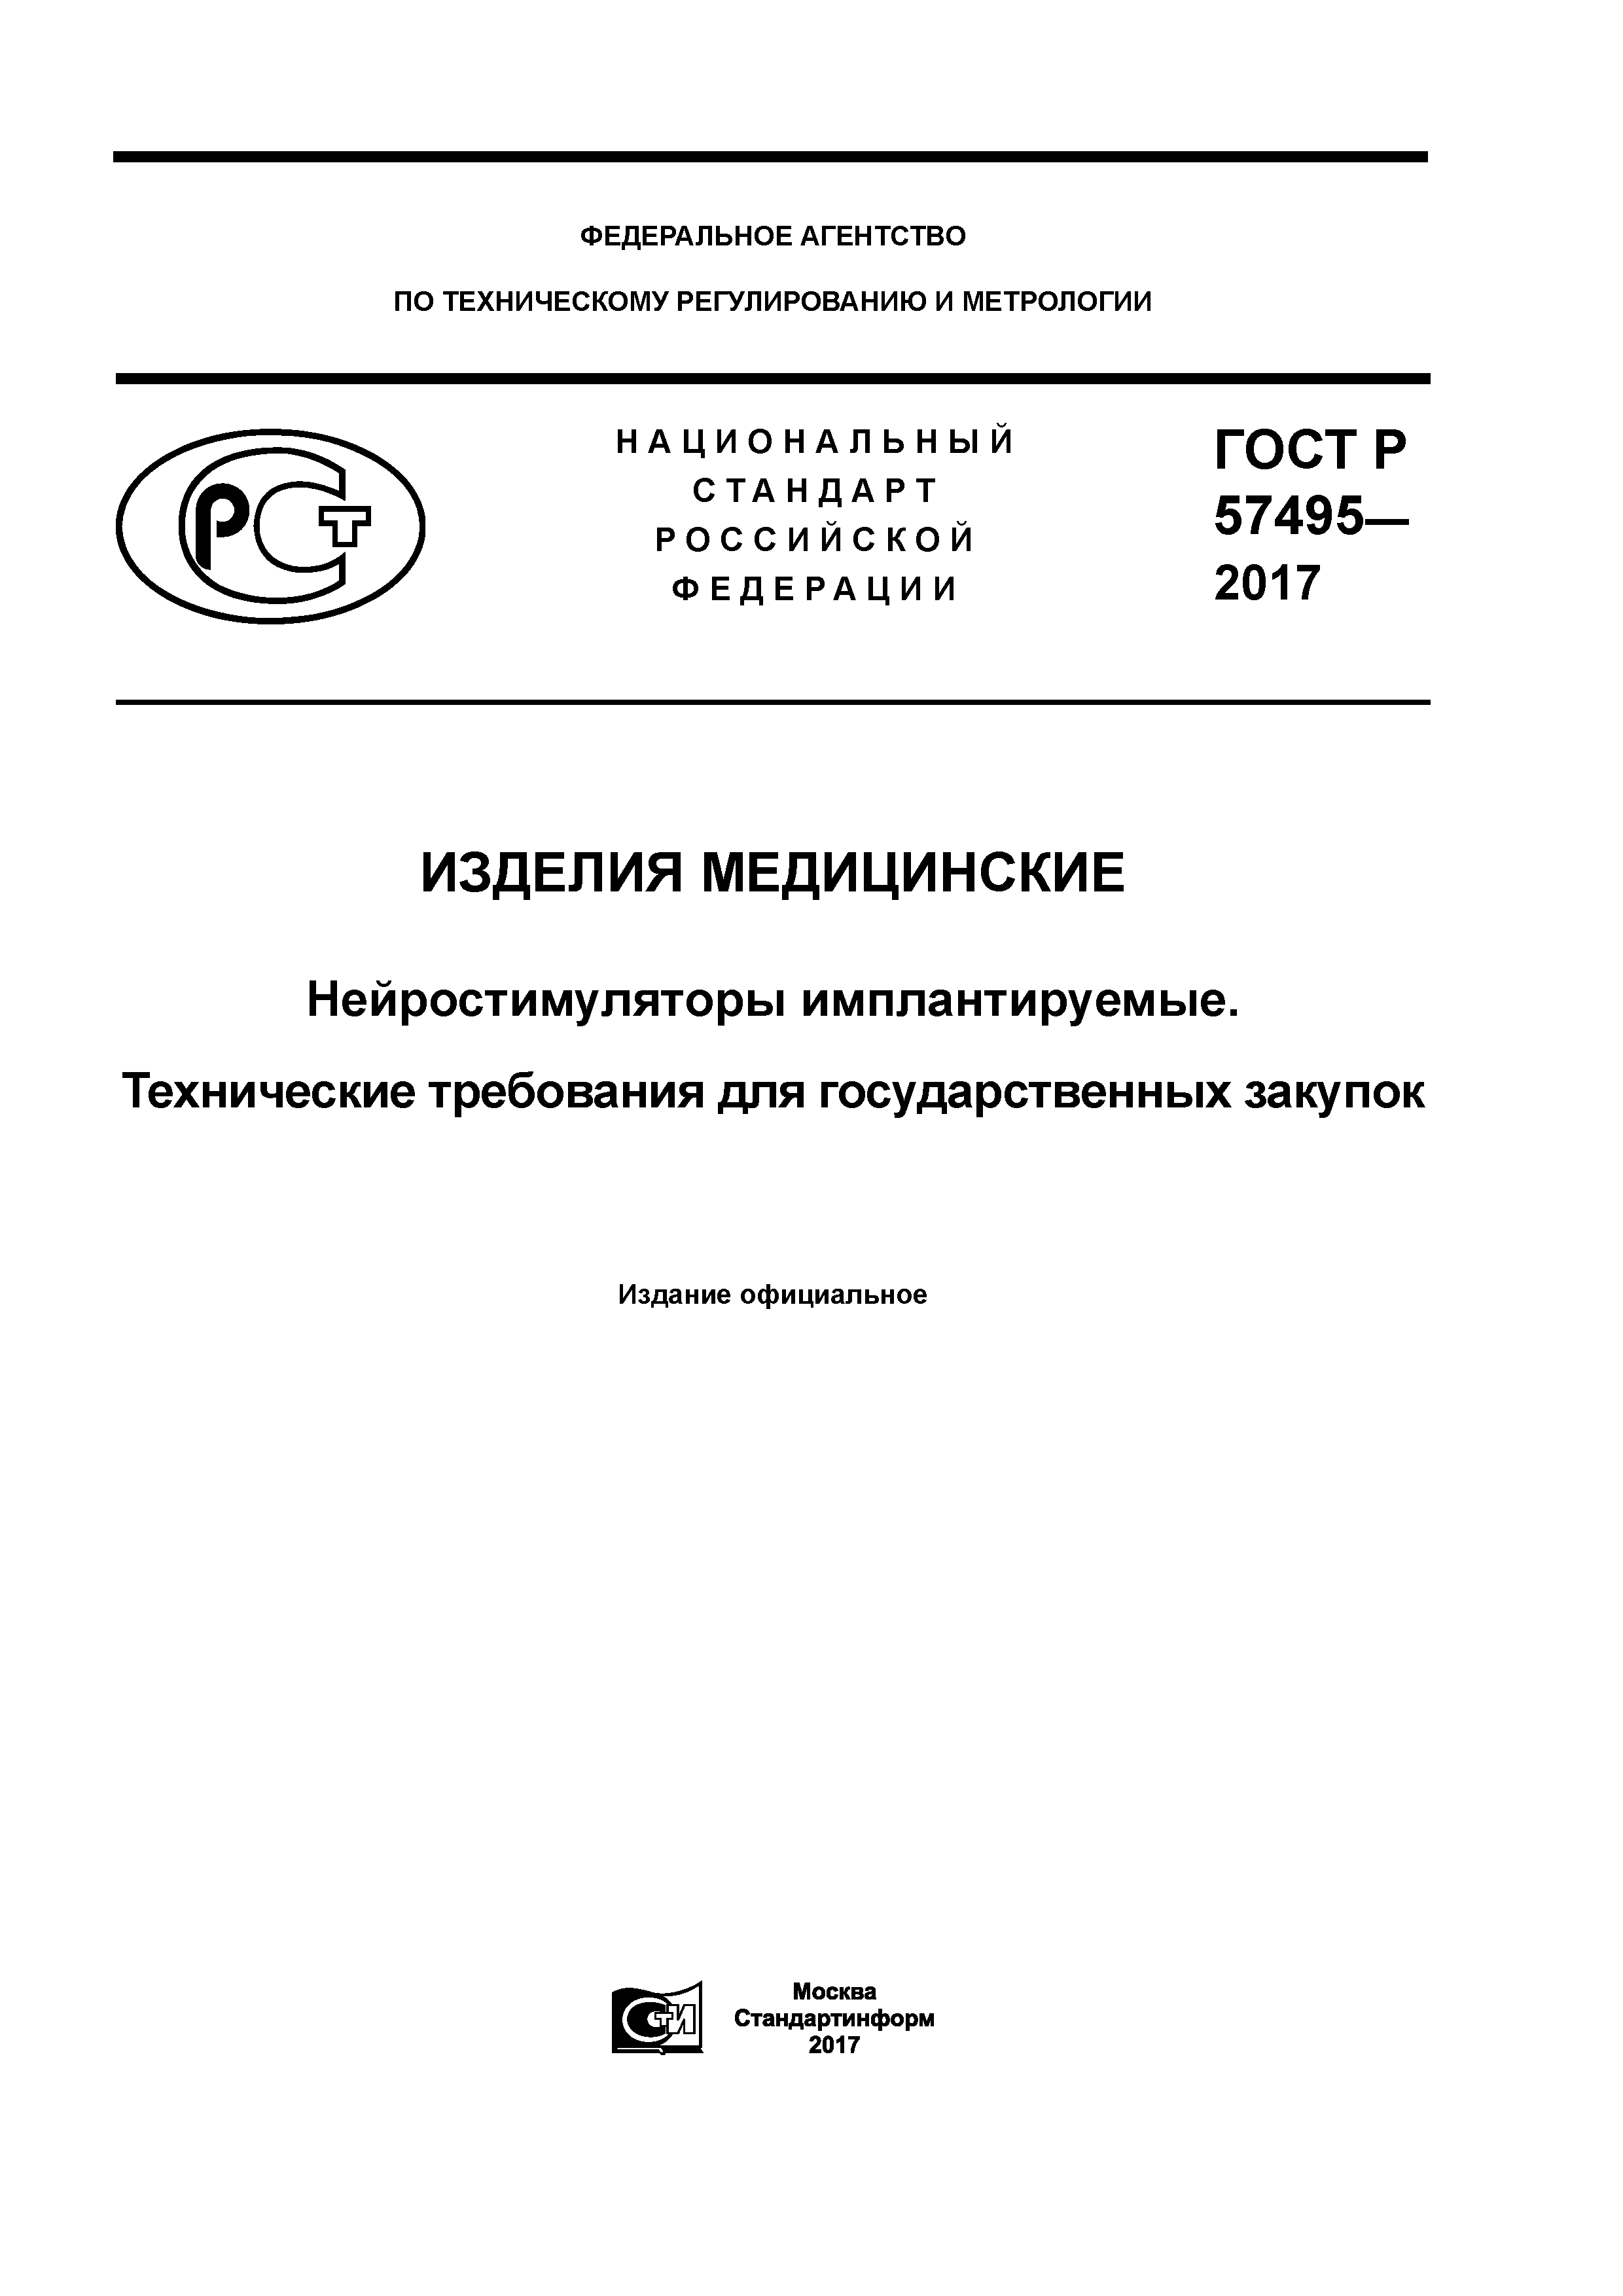 ГОСТ Р 57495-2017